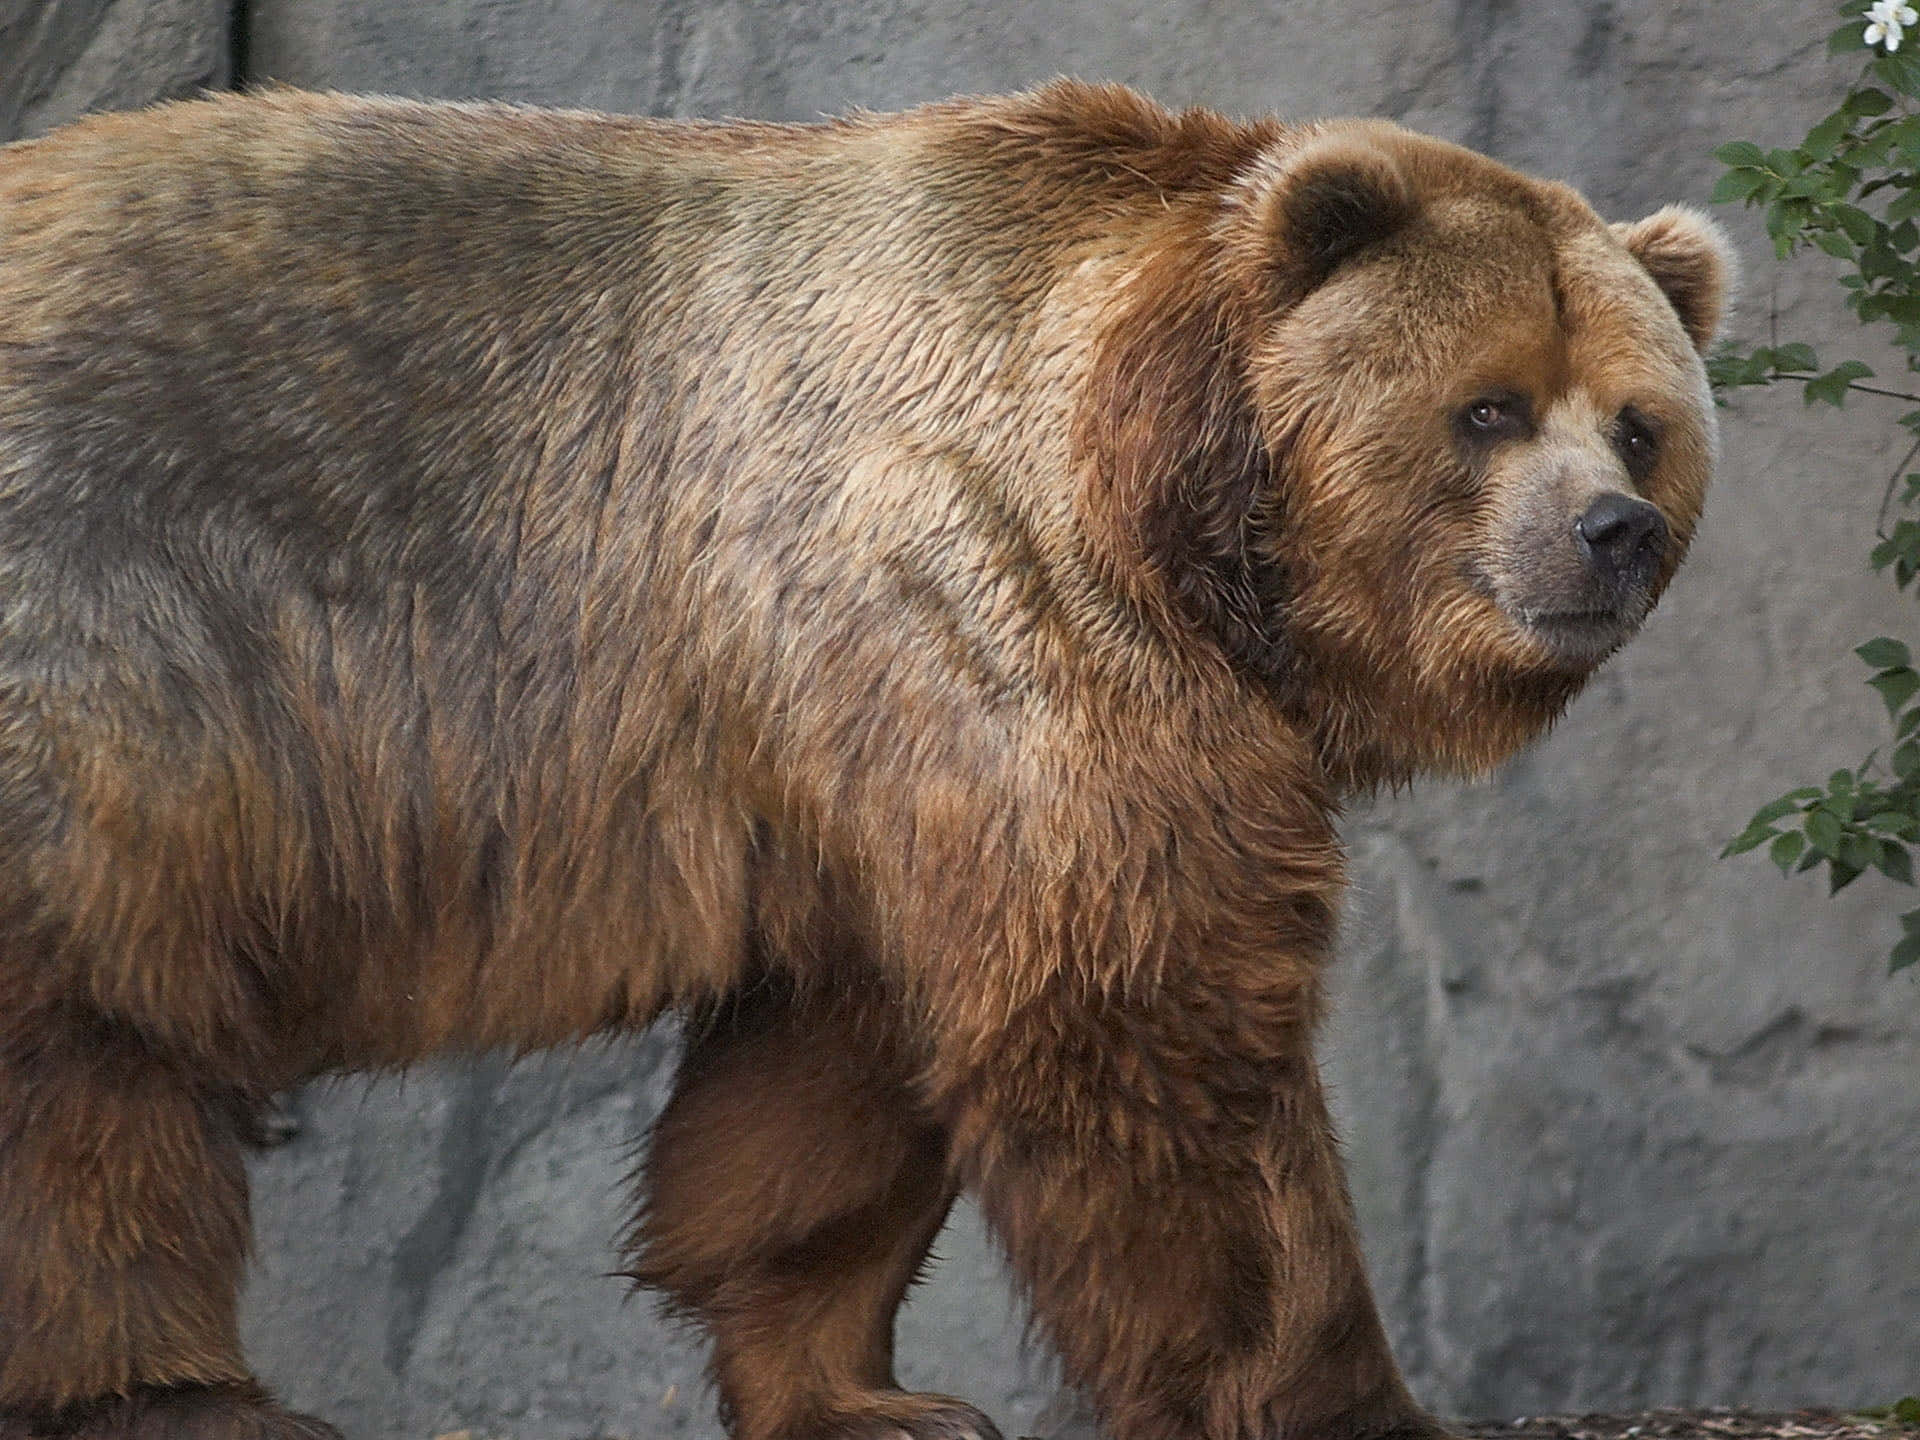 A rustic and powerful Kodiak Bear in its natural habitat